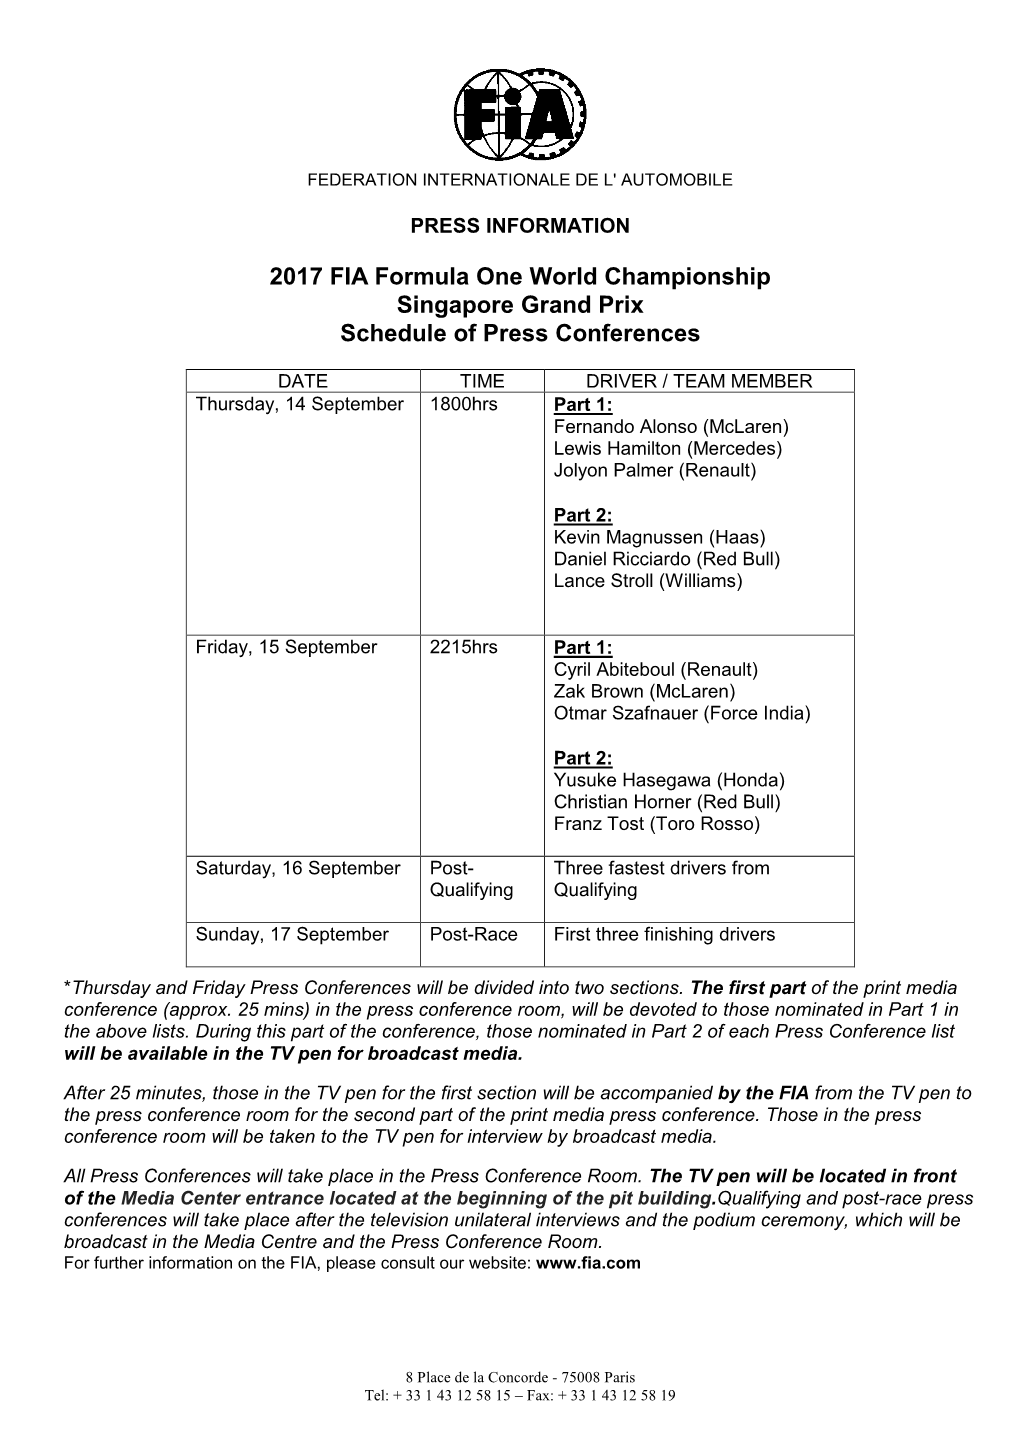 2017 FIA Formula One World Championship Singapore Grand Prix Schedule of Press Conferences